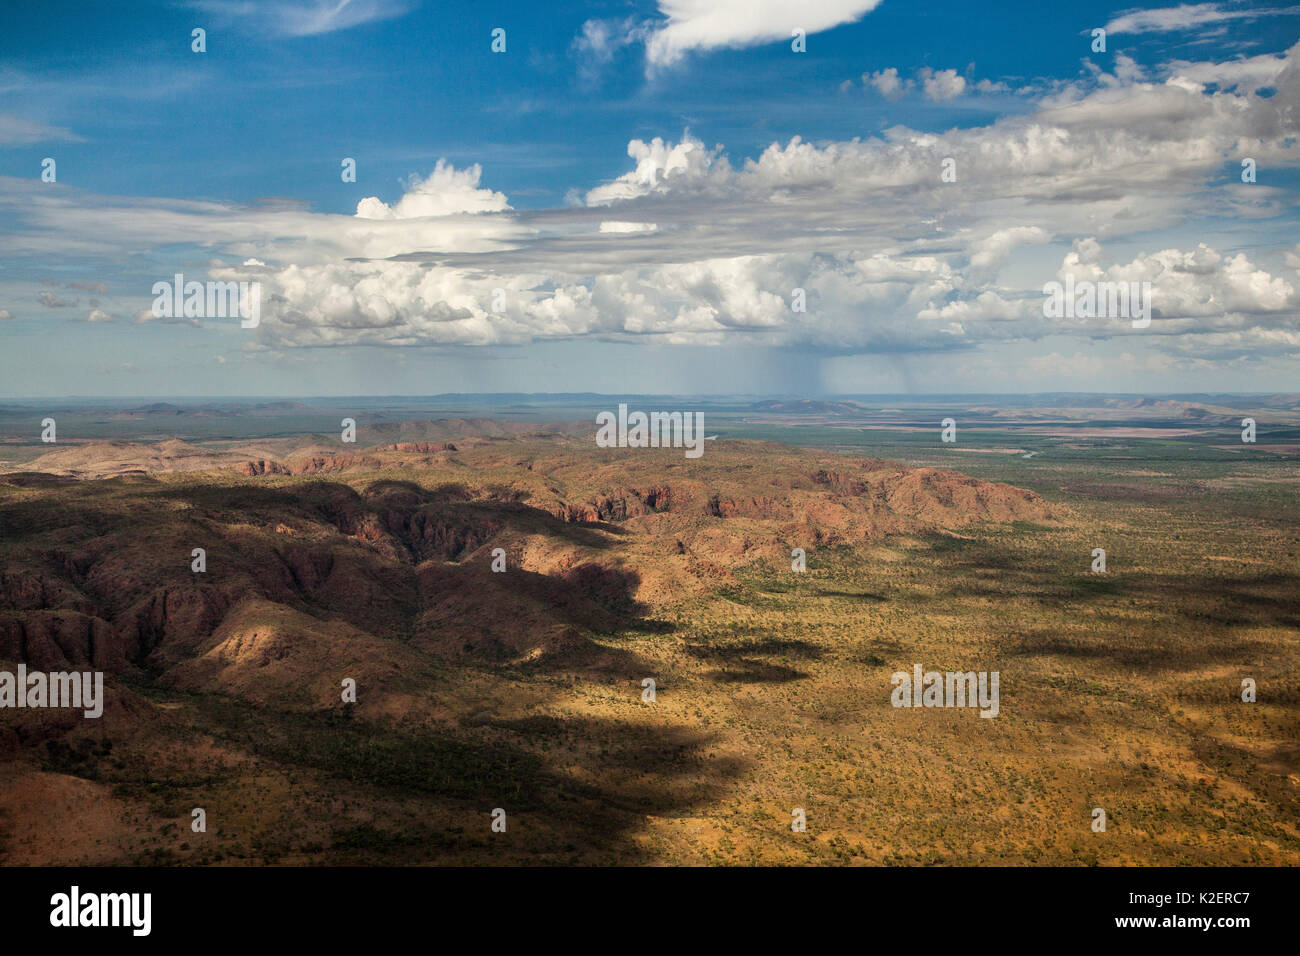 View from plane of mountain landscape, Kimberley, Western Australia, November. Stock Photo